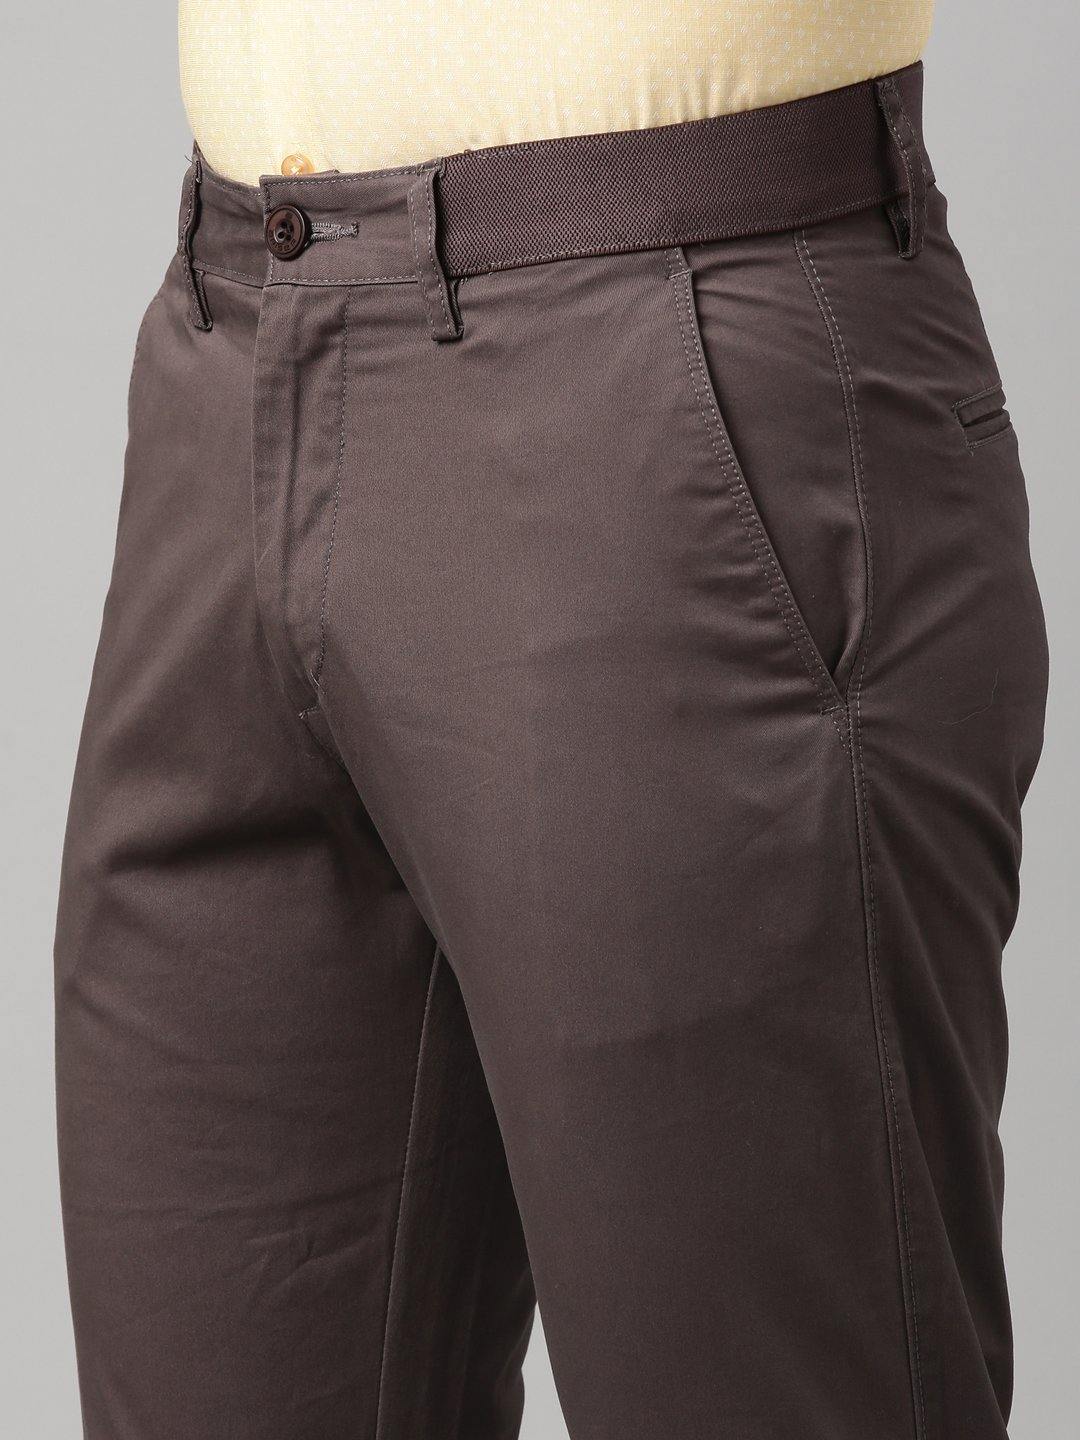 Buy Polo Ralph Lauren Khaki Elastic Waistband Trousers Online  630057   The Collective